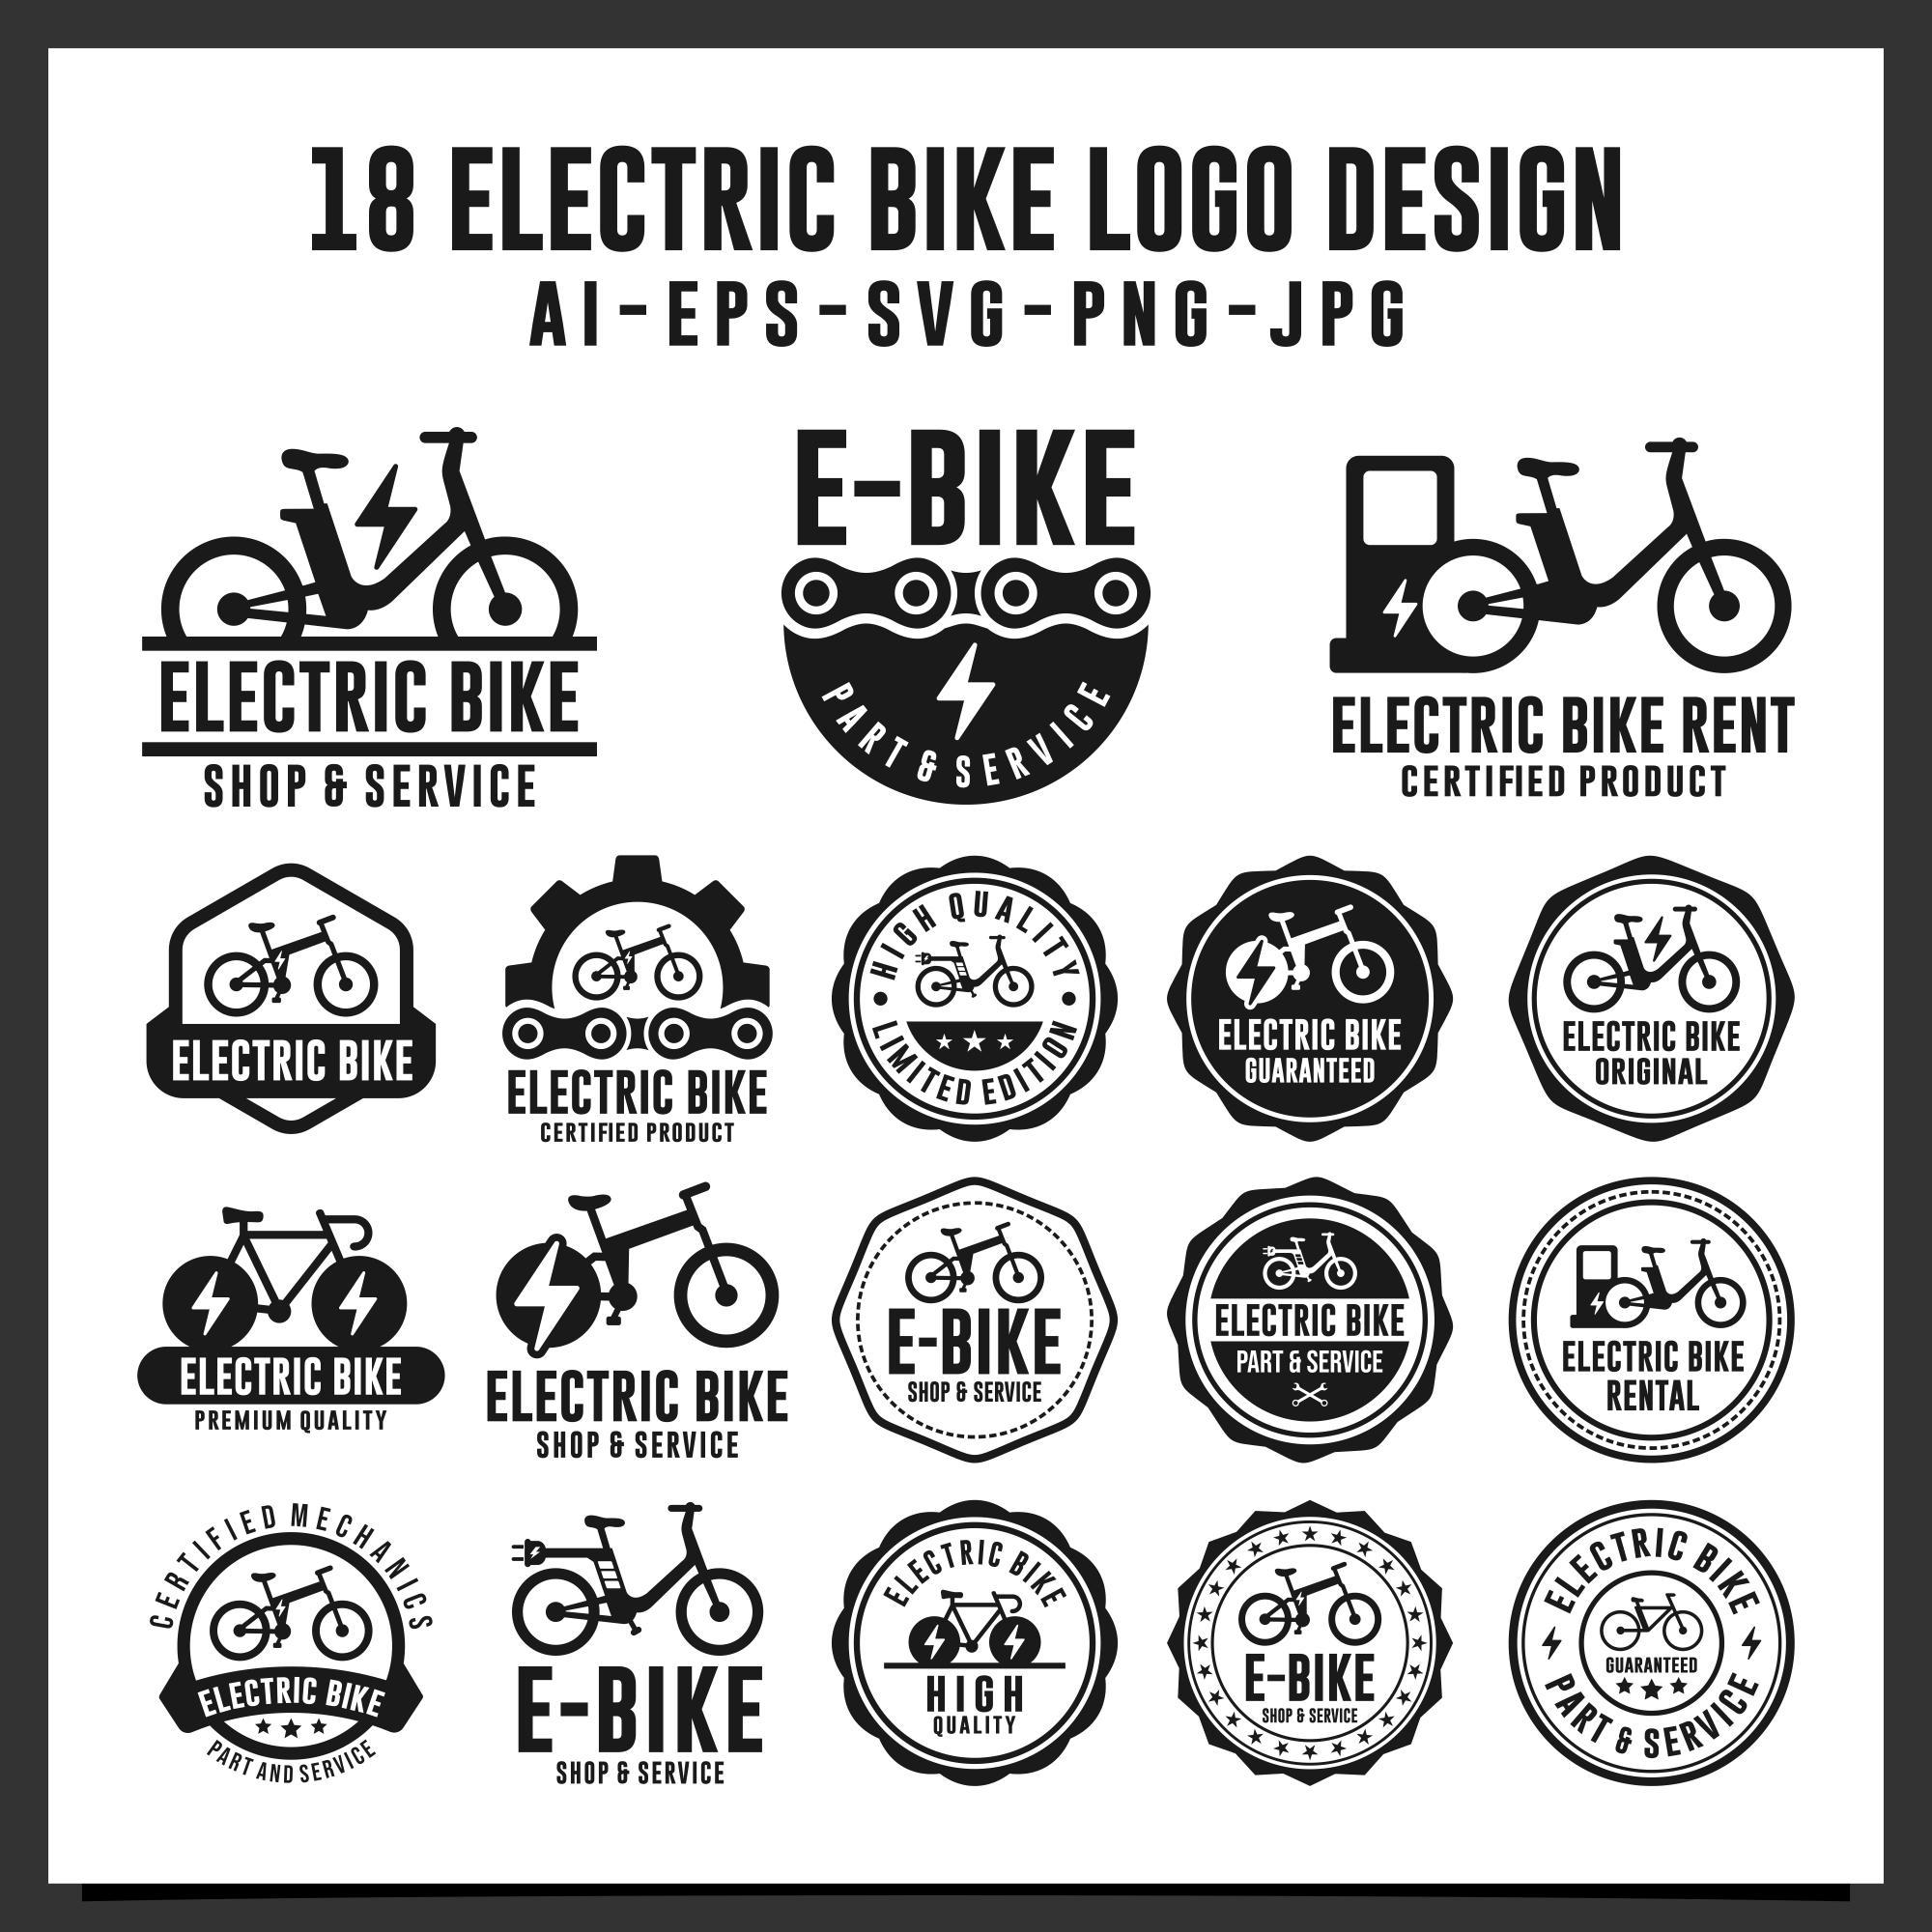 18 Electric bike logo design colection - $12 - MasterBundles